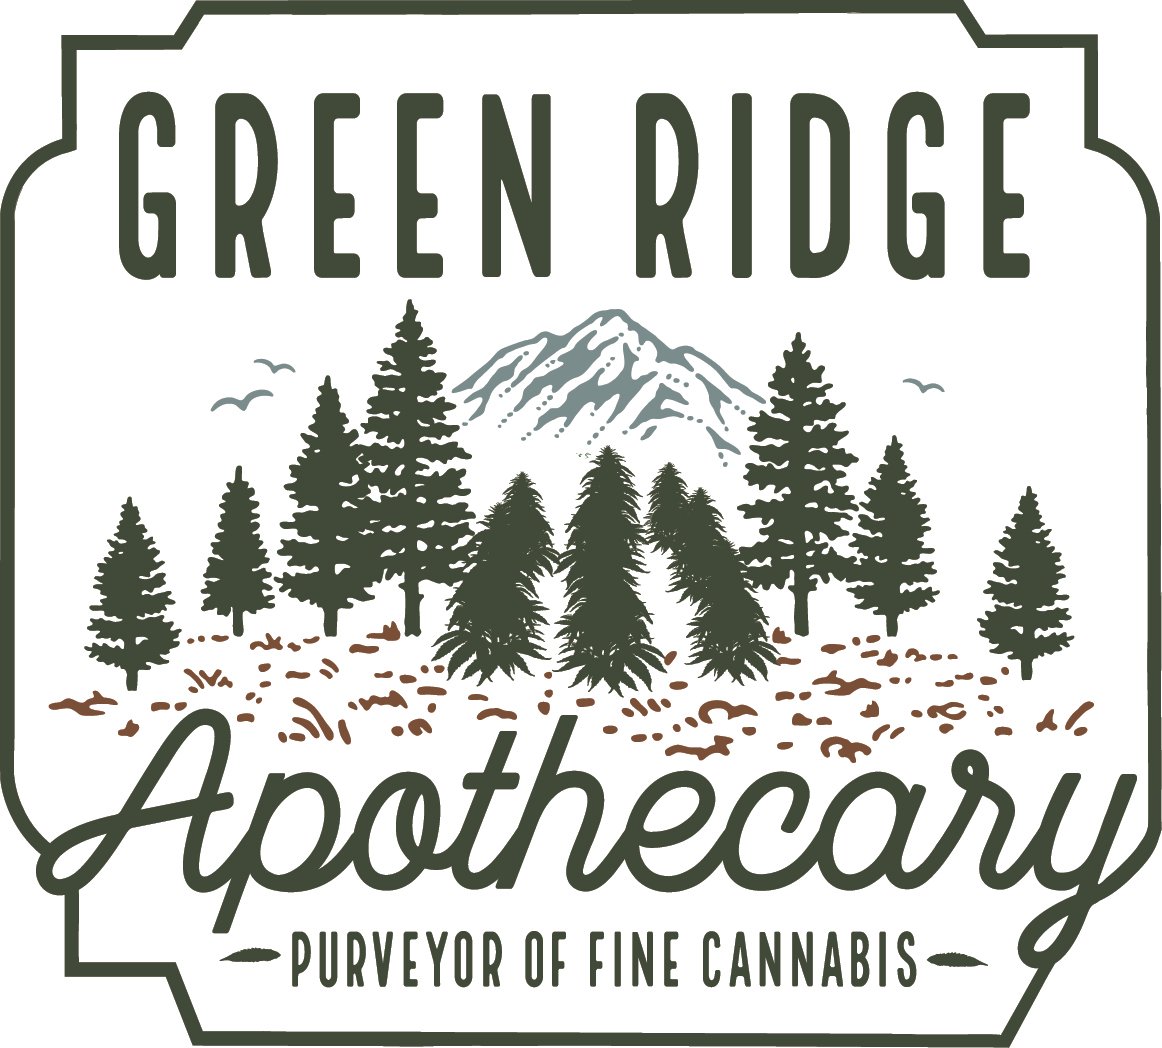 Green Ridge Apothecary